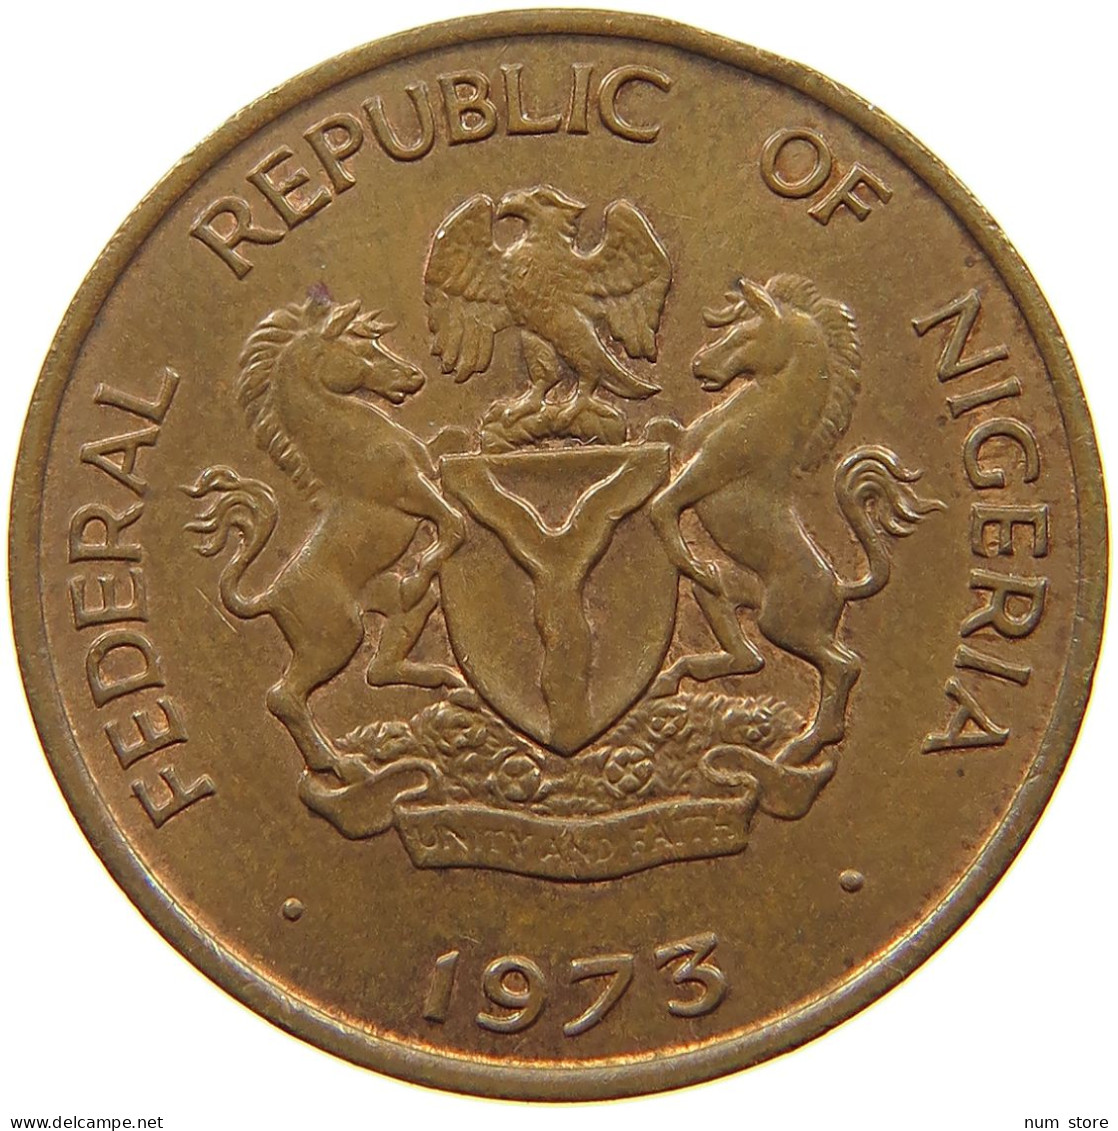 NIGERIA KOBO 1973  #a095 0225 - Nigeria